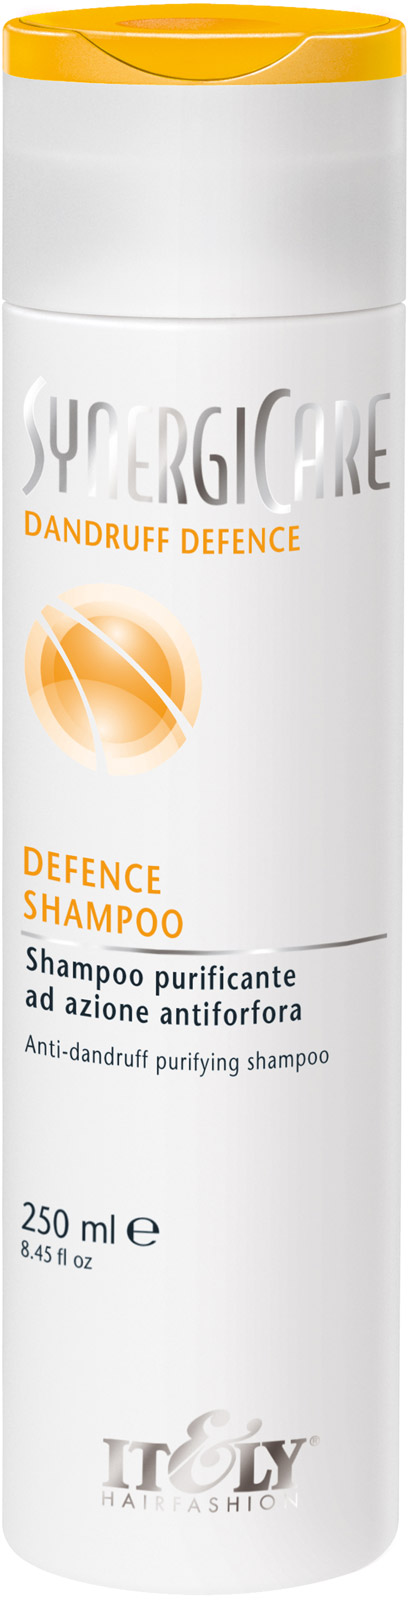 фото Шампунь для волос Itely Hairfashion защитный против перхоти Defence Shampoo 250 ml